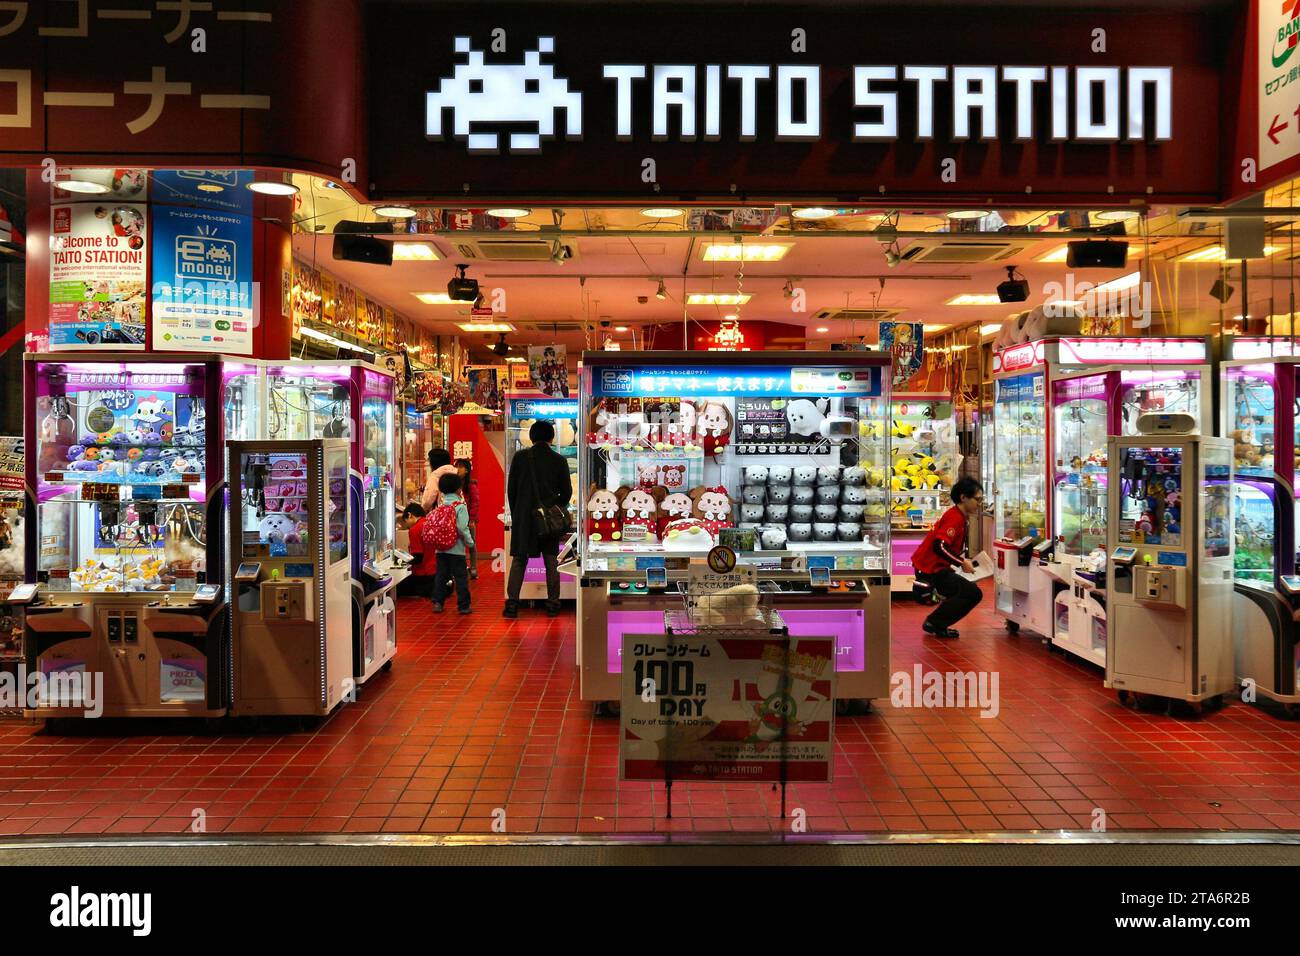 TOKYO, JAPAN - DECEMBER 1, 2016: People claw grabber machine arcade in night Akihabara district of Tokyo. Akihabara district has reputation for electr Stock Photo